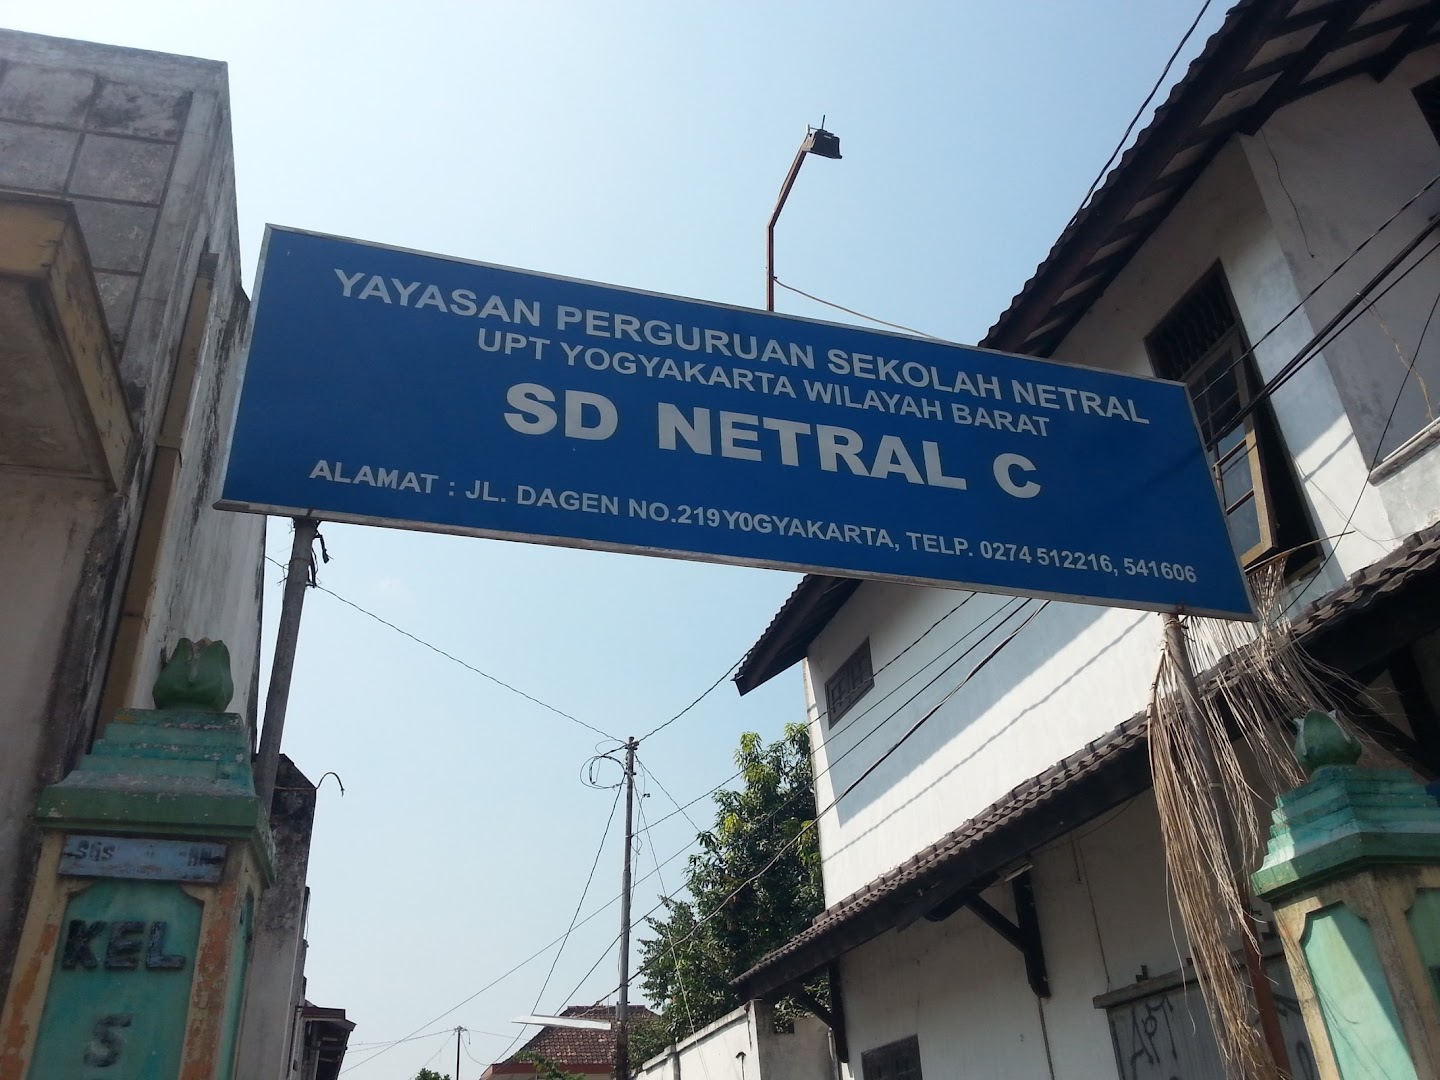 Yayasan Perguruan Sekolah Netral Upt Yogyakarta Wilayah Barat Photo